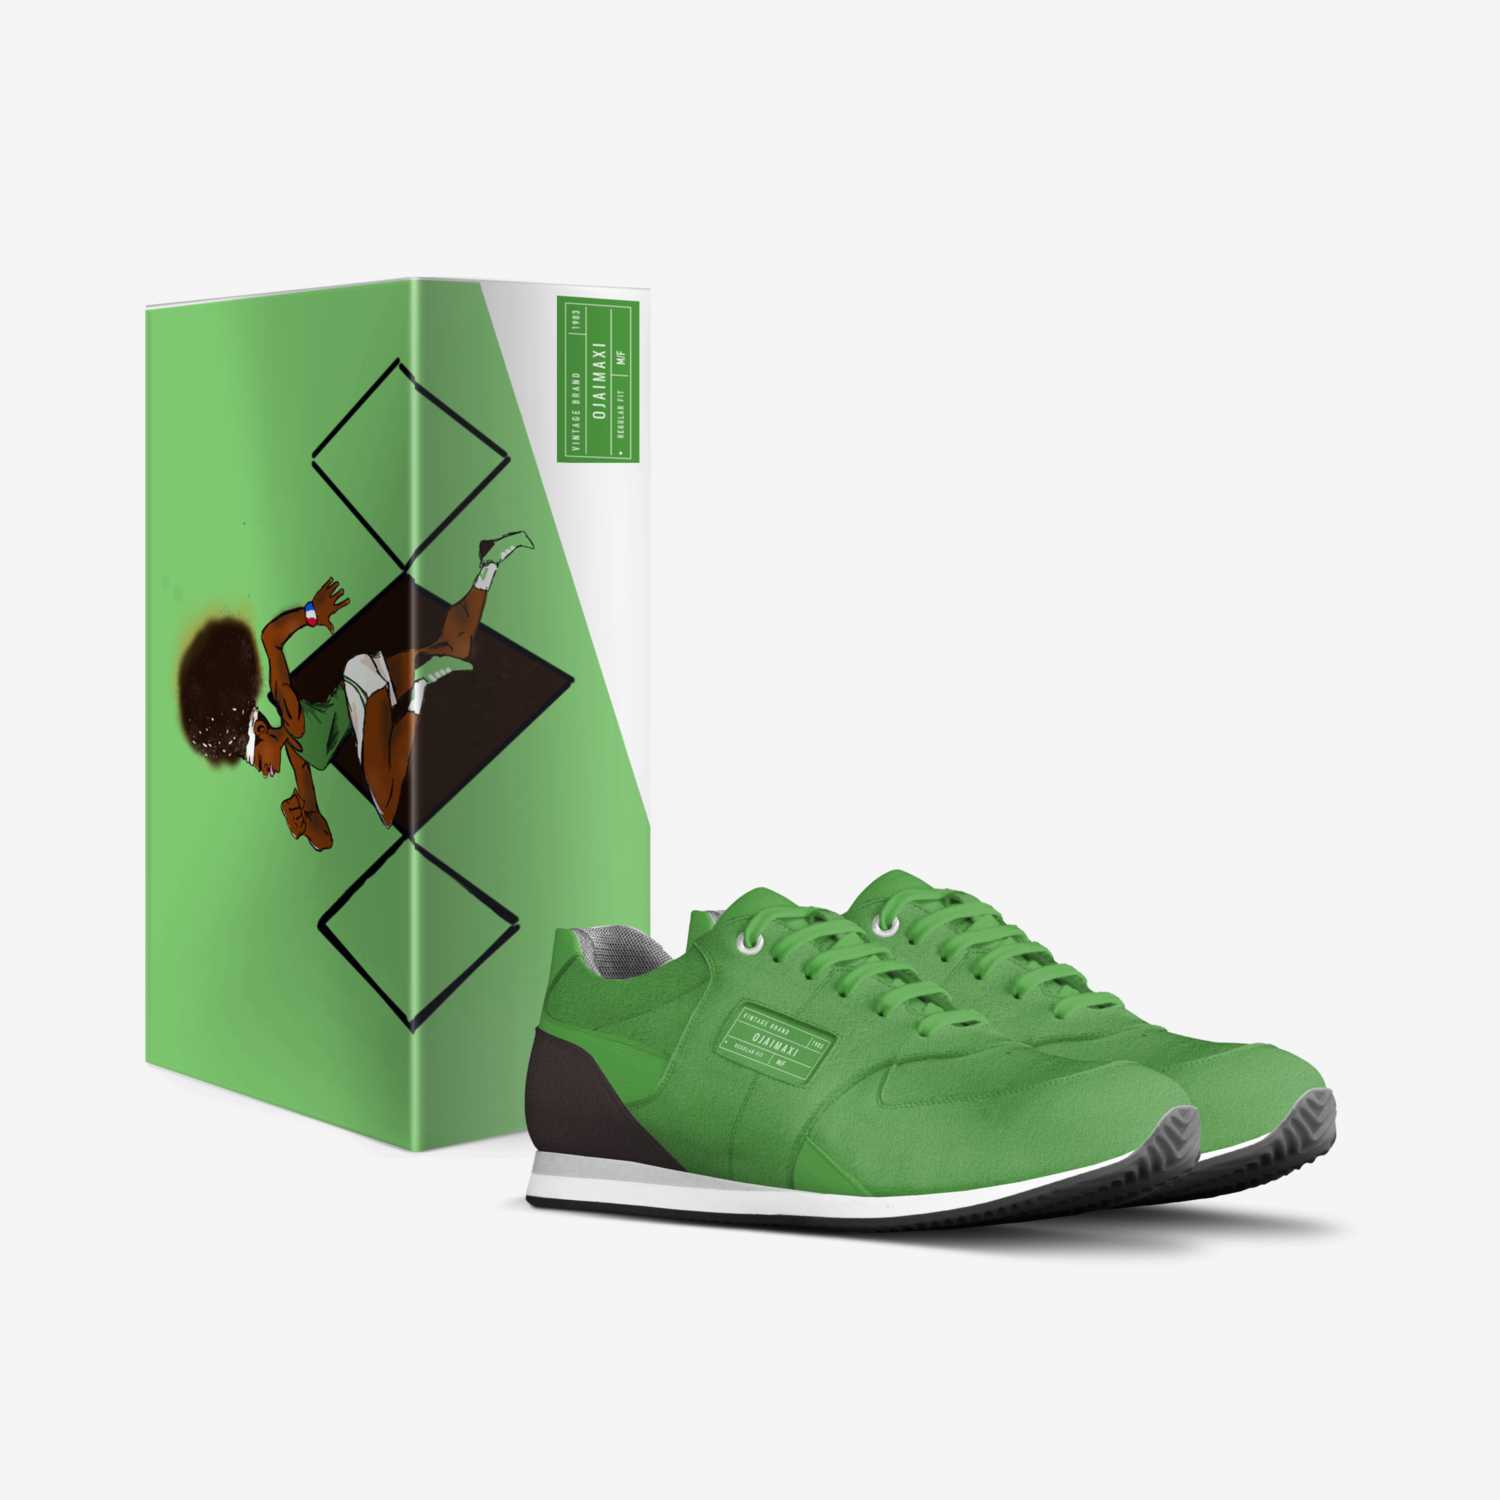 OJAI custom made in Italy shoes by Maxie Ojai Bell | Box view